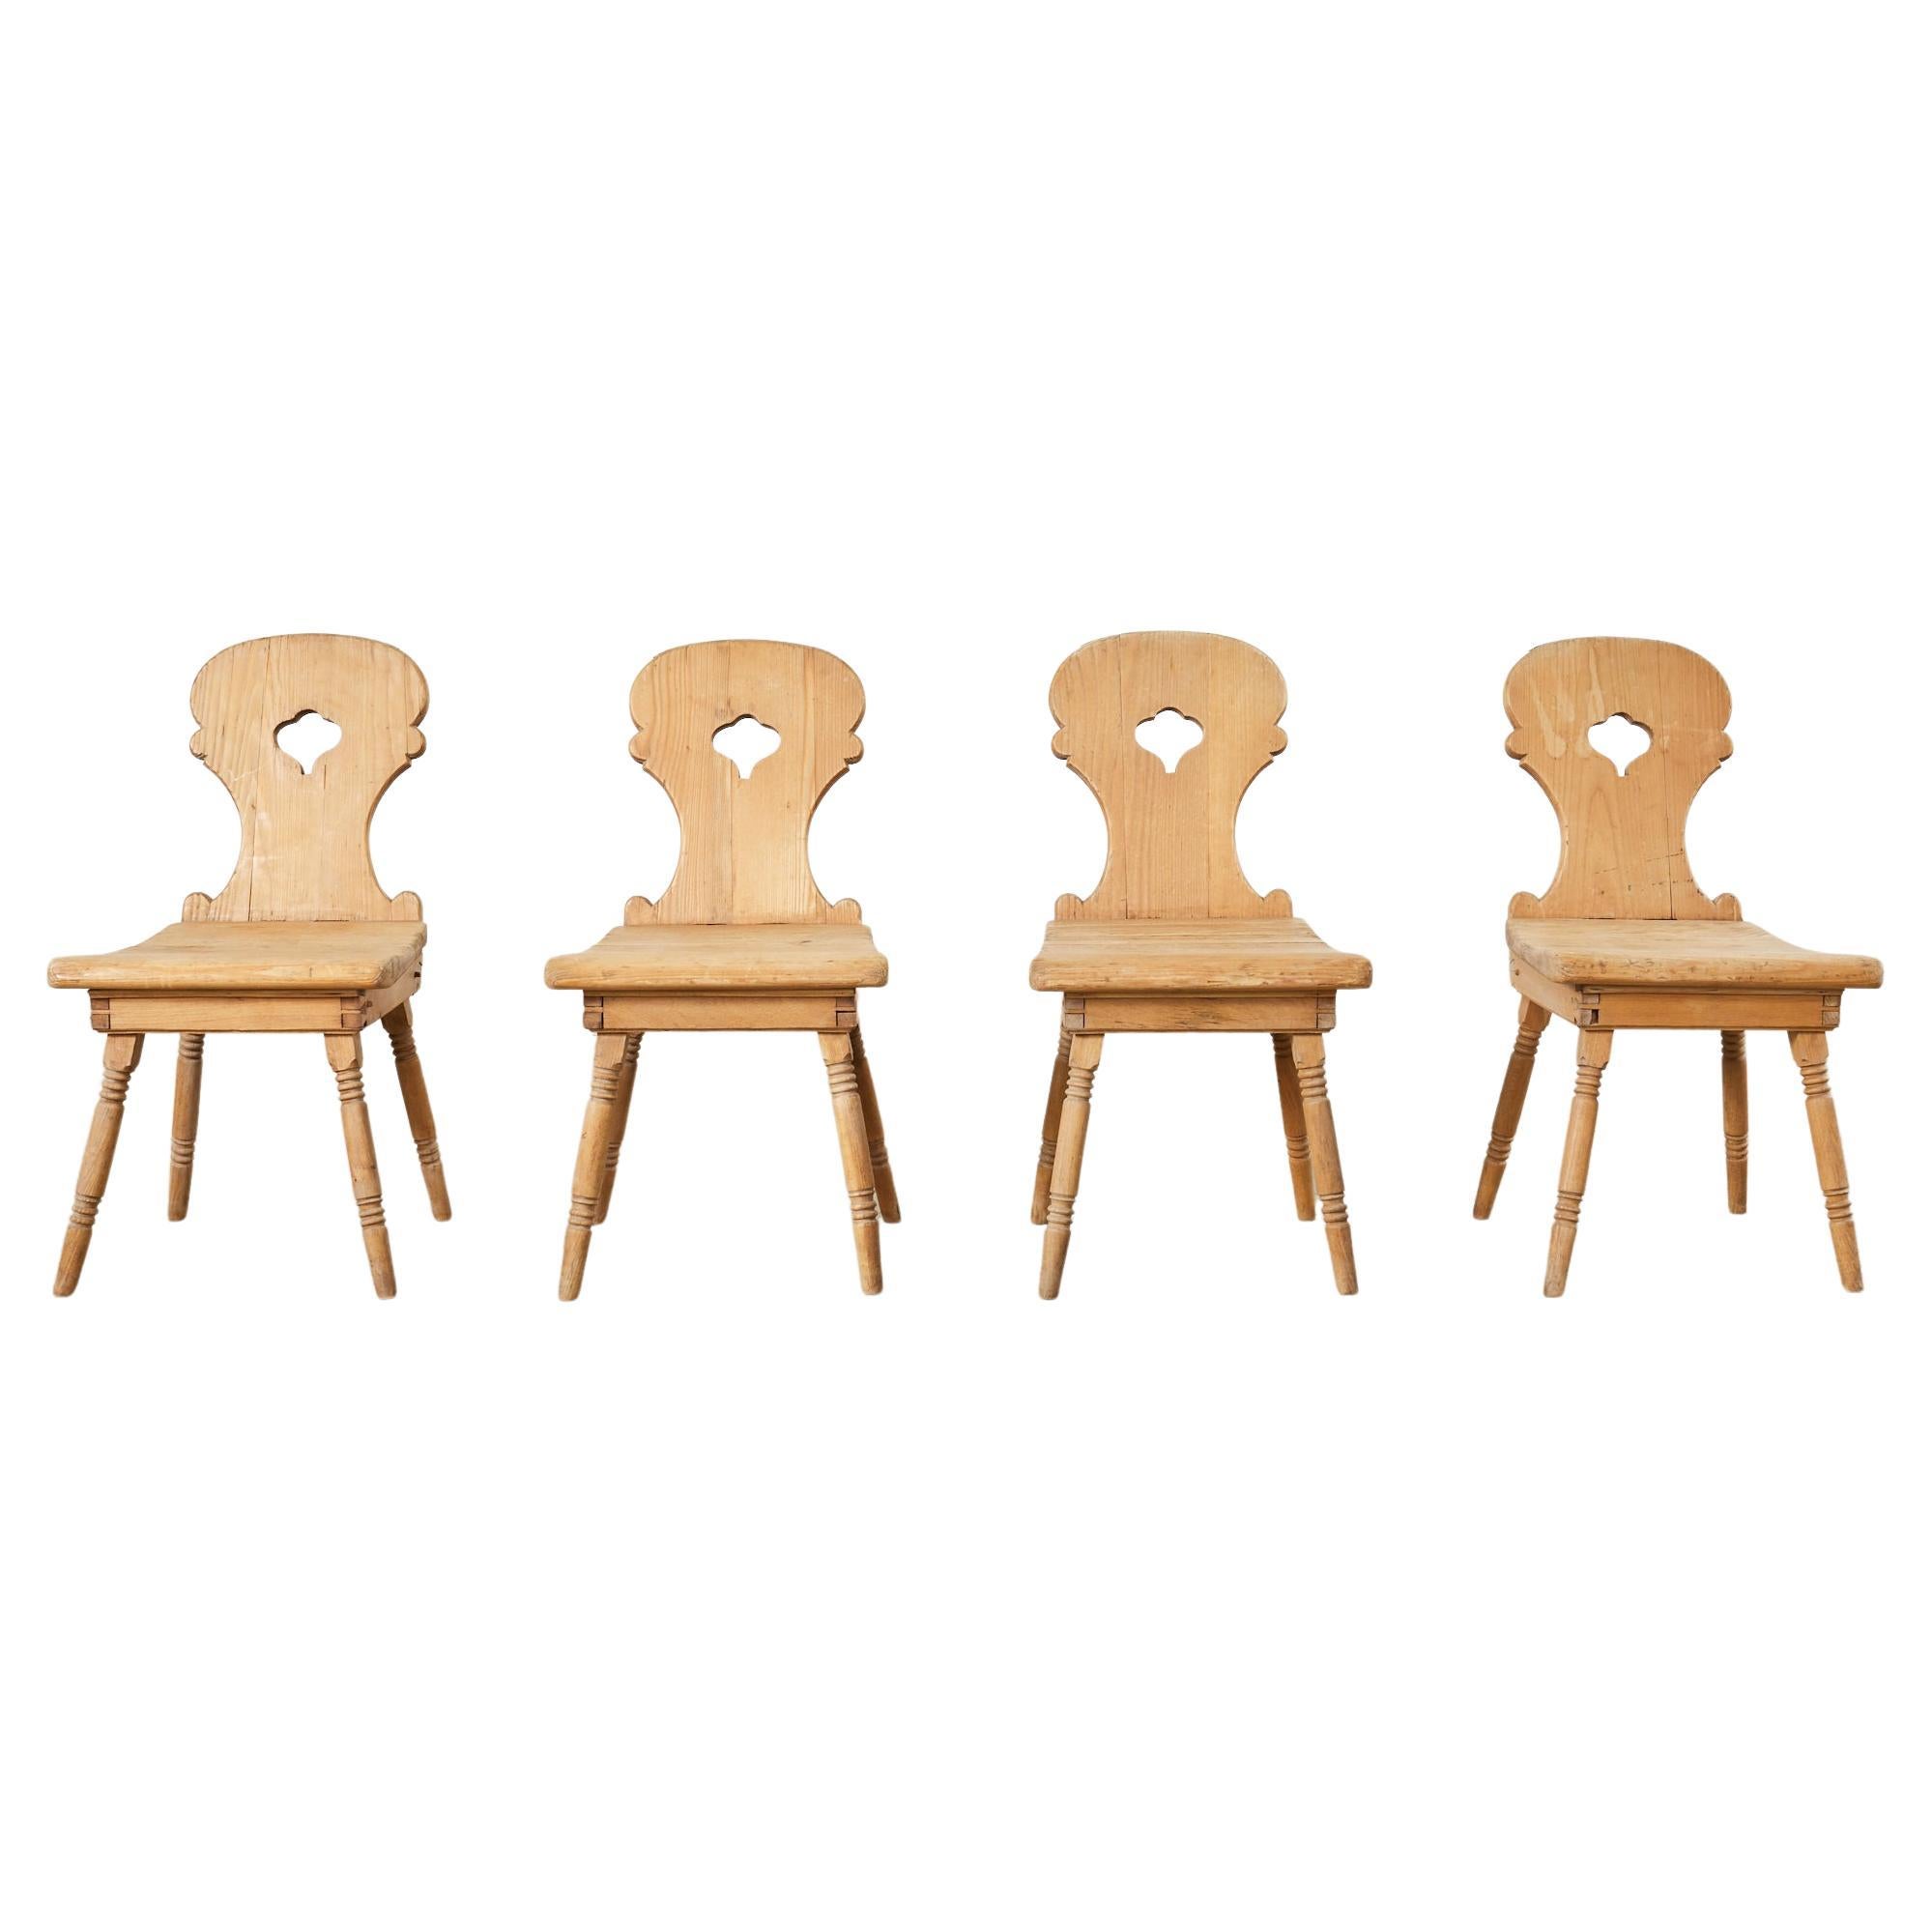 Set of Four 19th Century Primitive Swedish Folk Art Pine Chairs For Sale